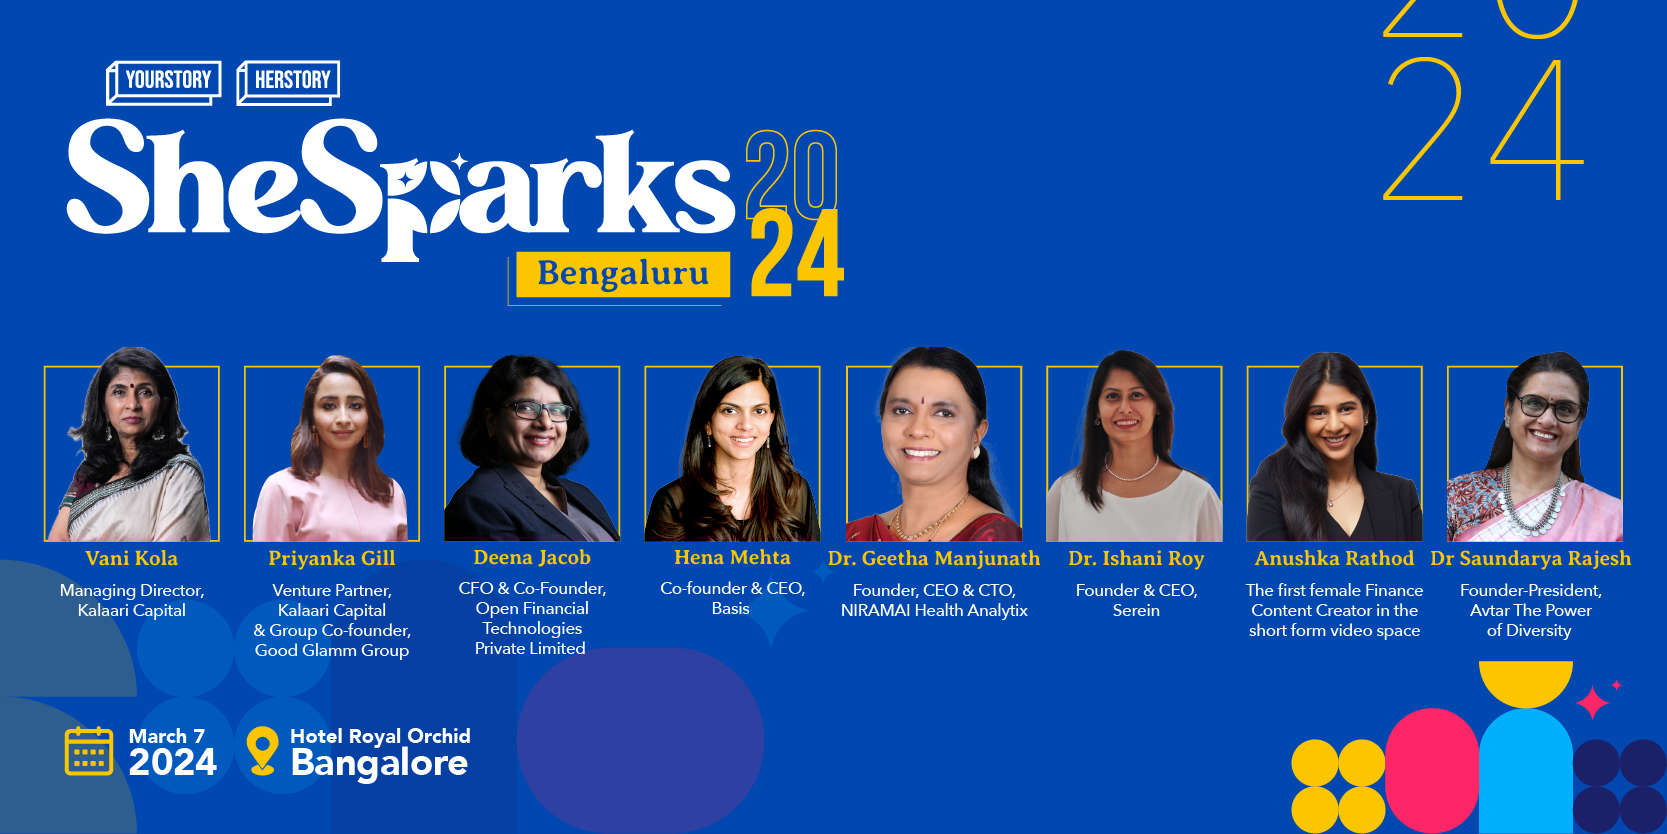 From Priyanka Gill to Vani Kola: meet India’s most inspiring changemakers and leaders at SheSparks 2024